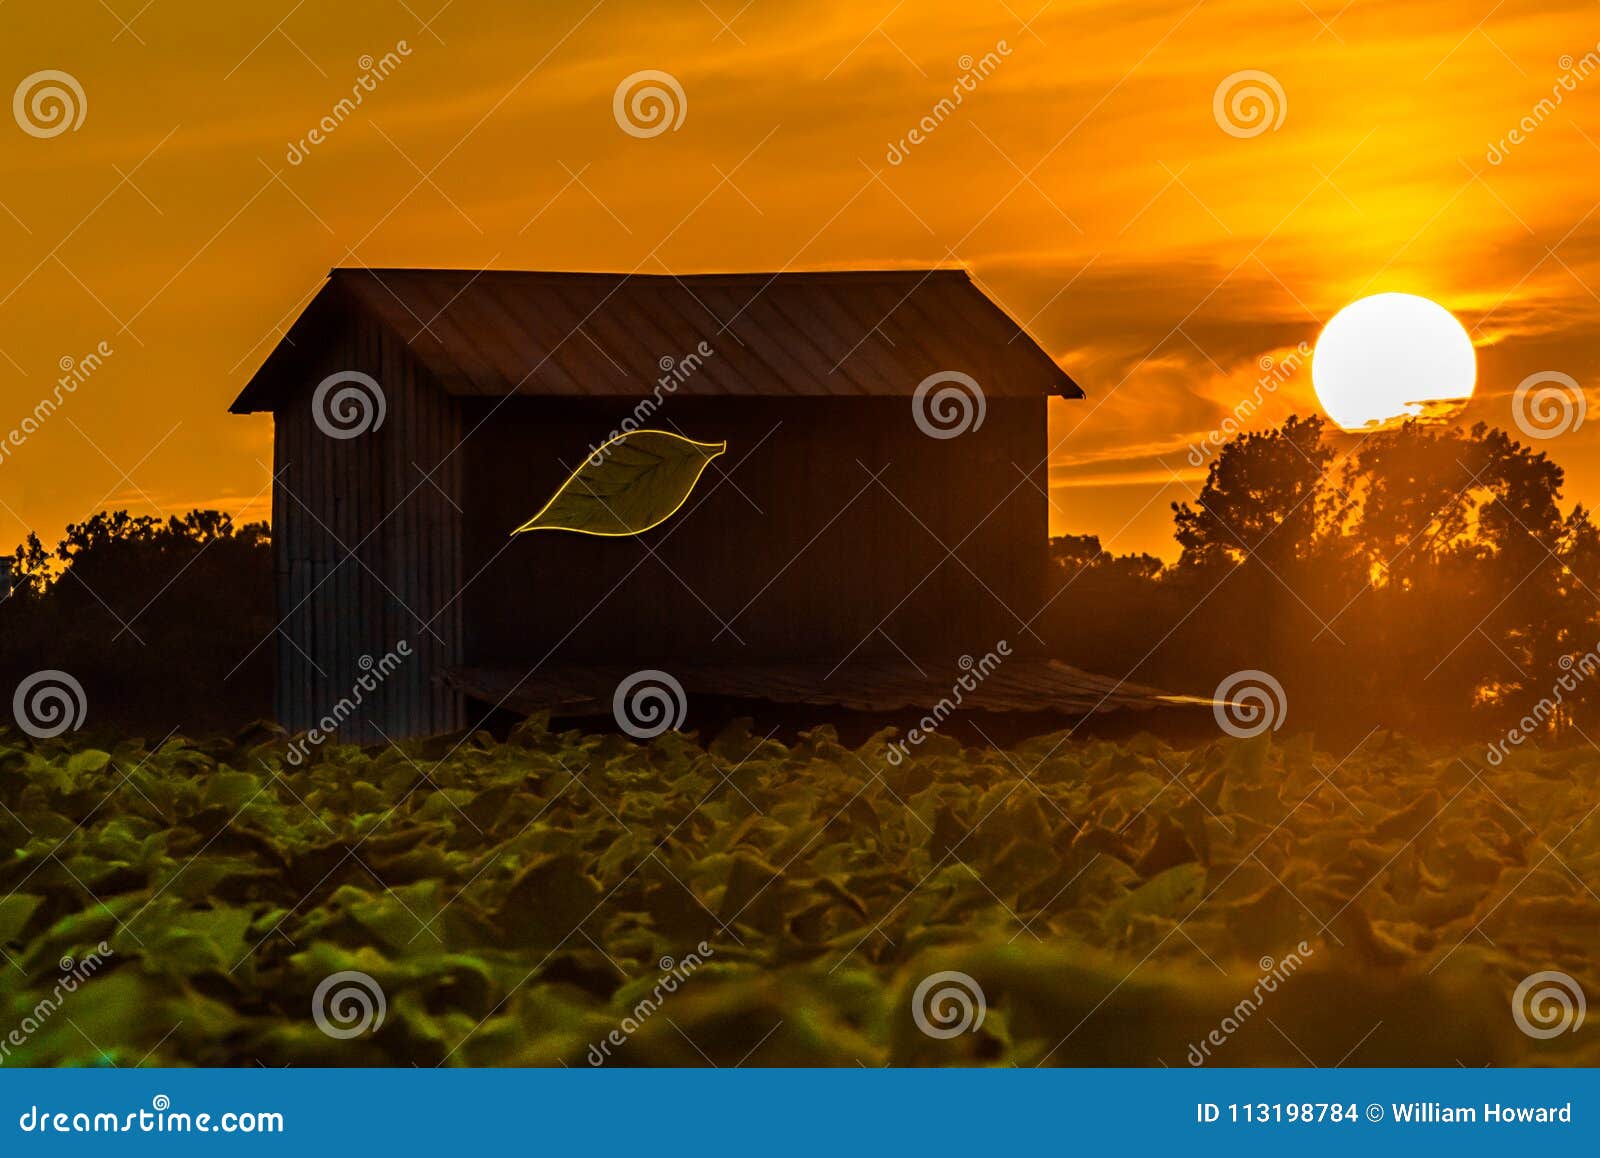 tobacco barn at sunset